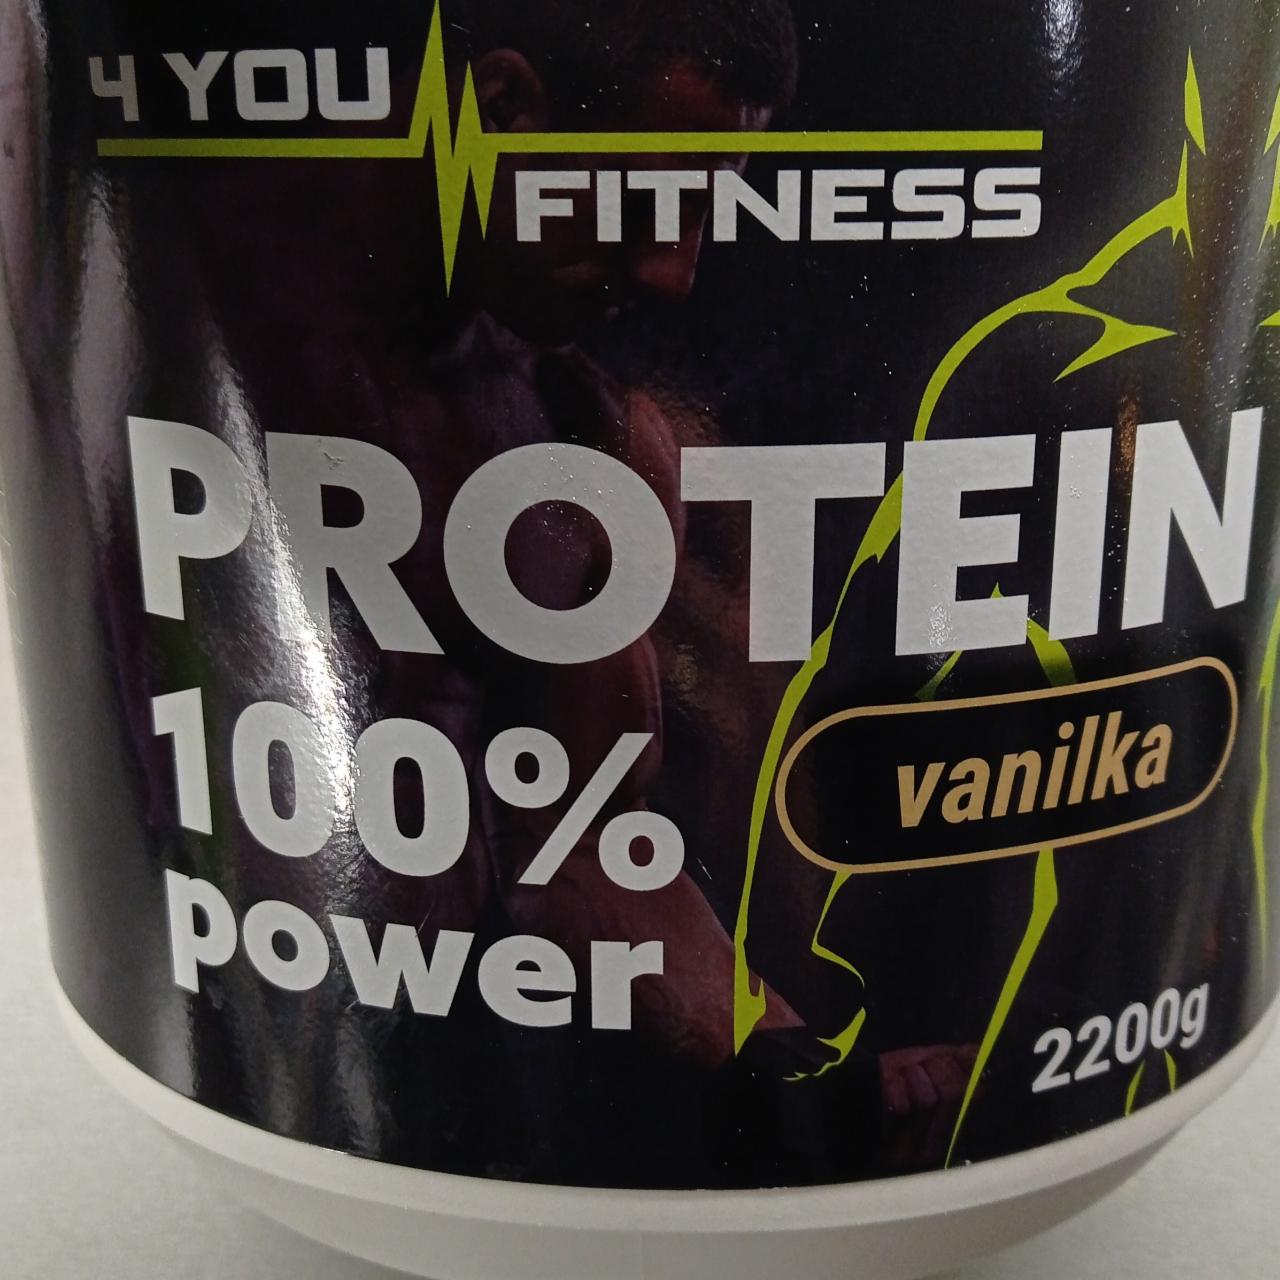 Fotografie - Protein 100% power Vanilka 4 You Fitness